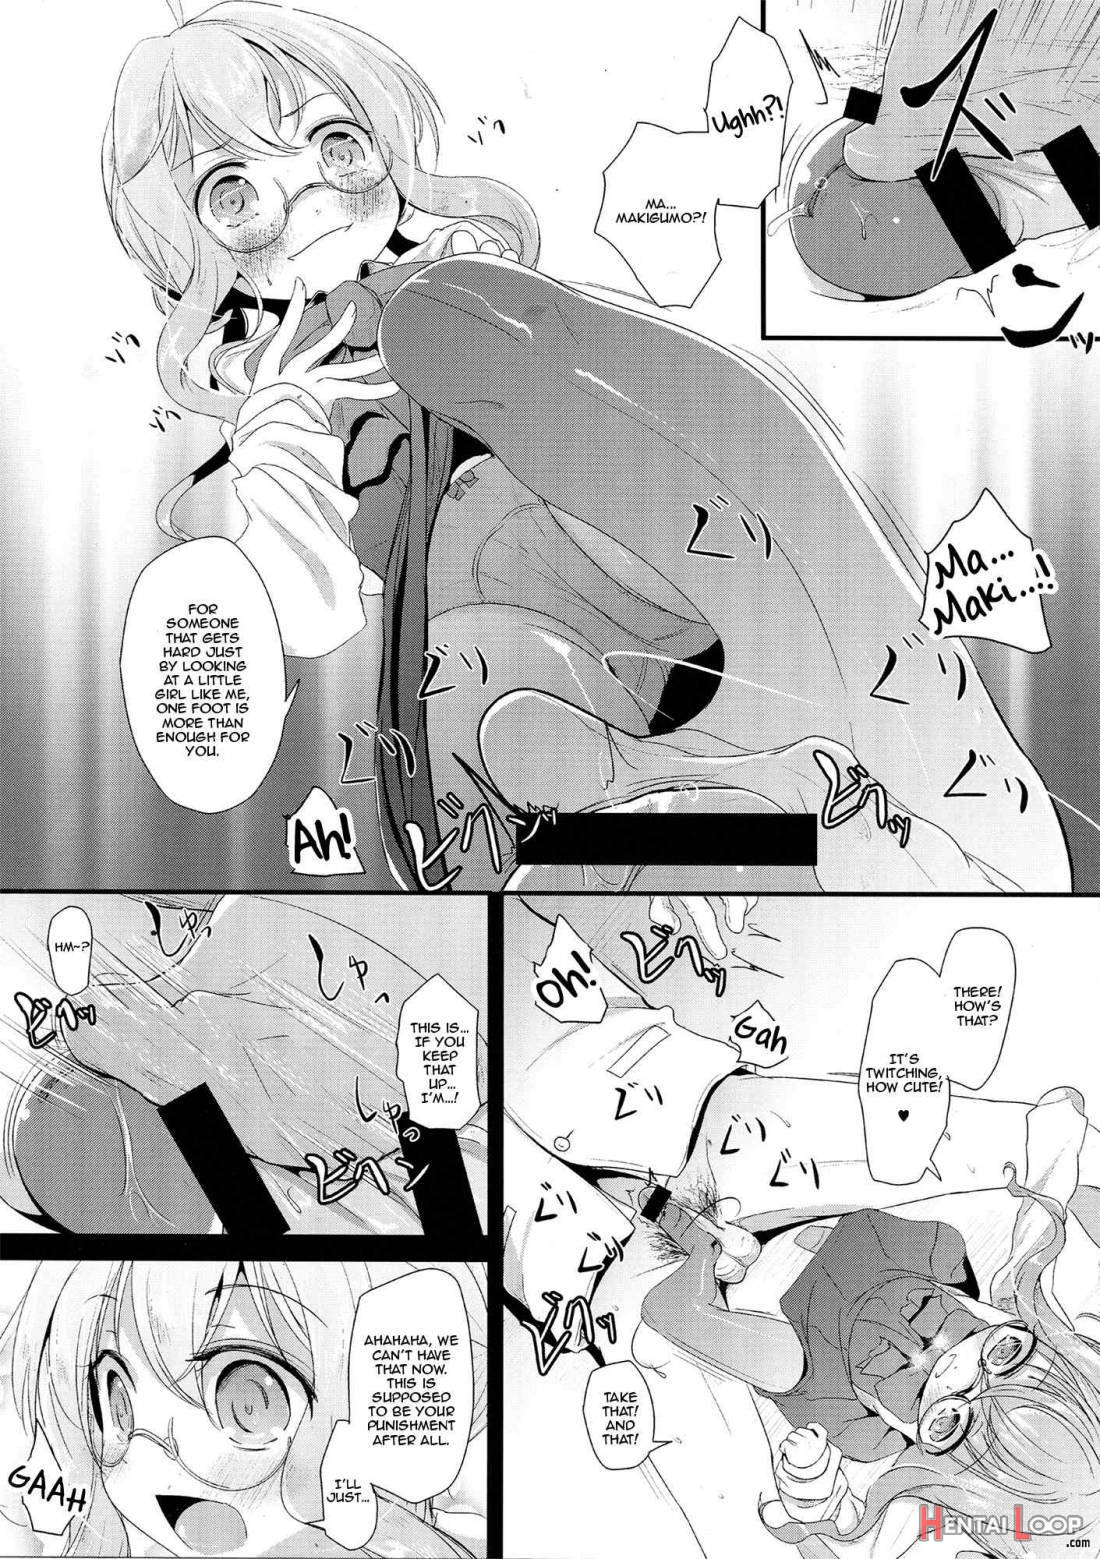 Makigumo-chance page 6